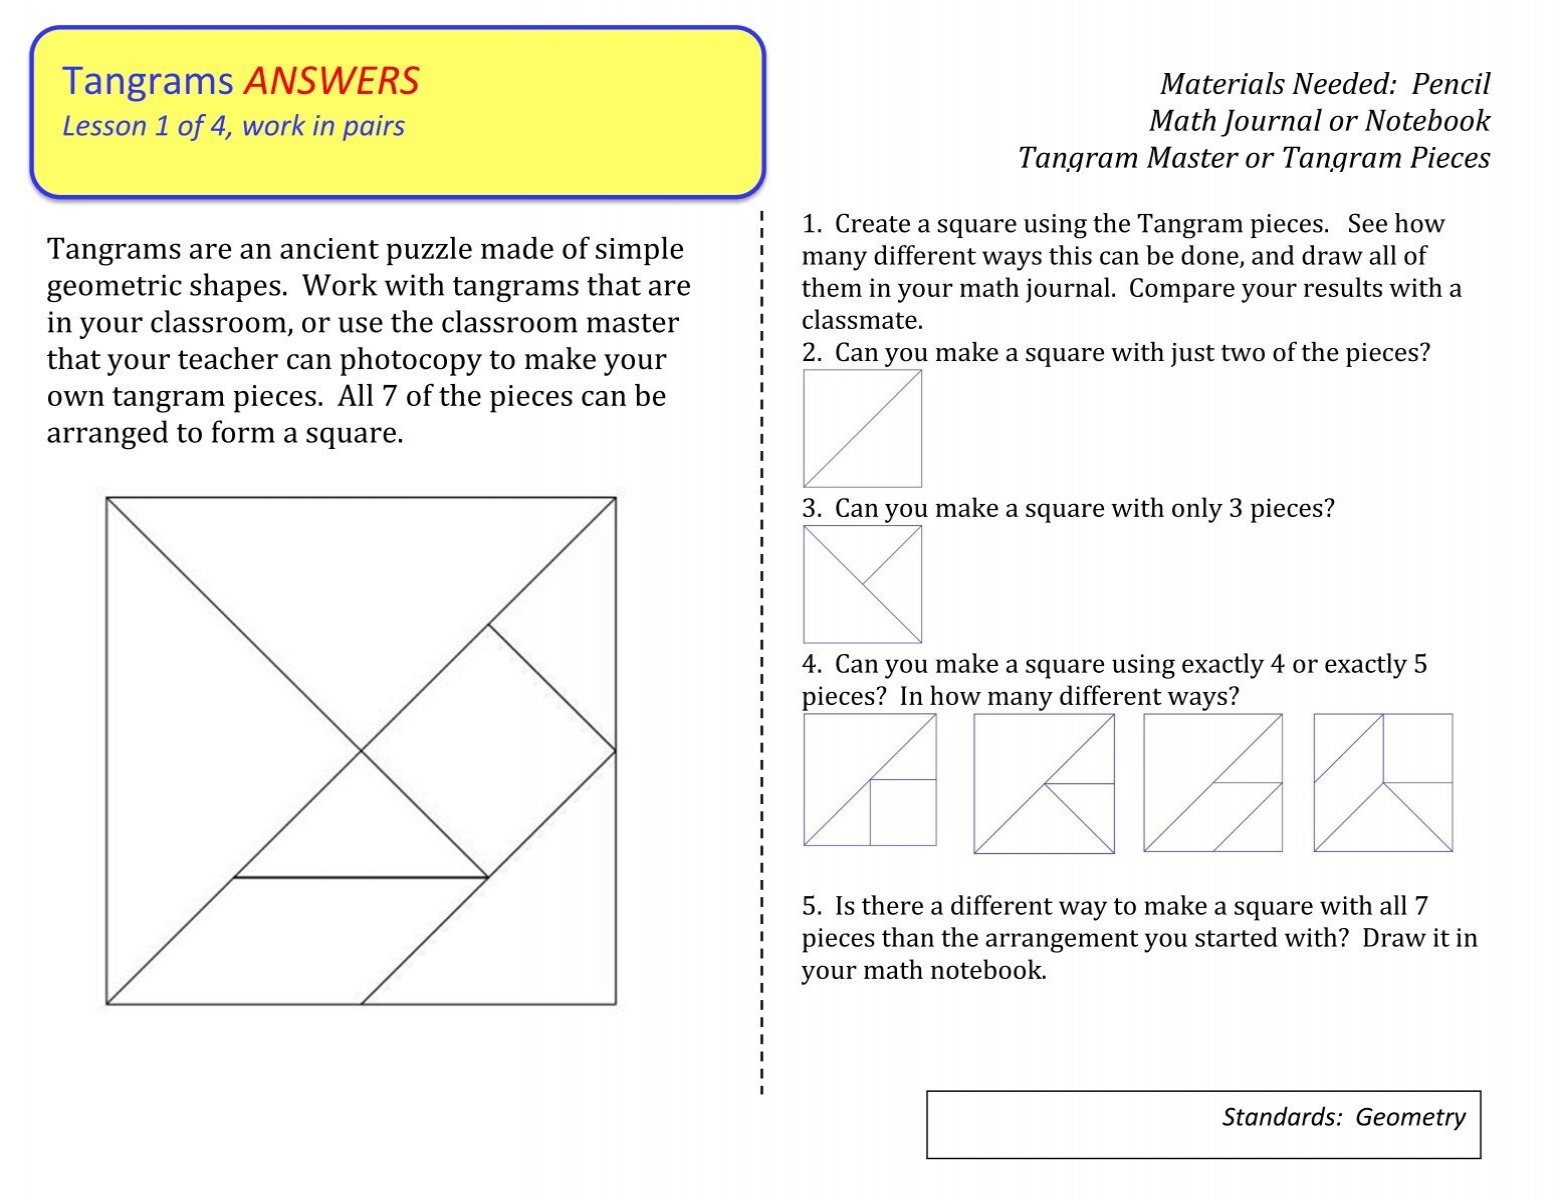 tangrams-answers-math